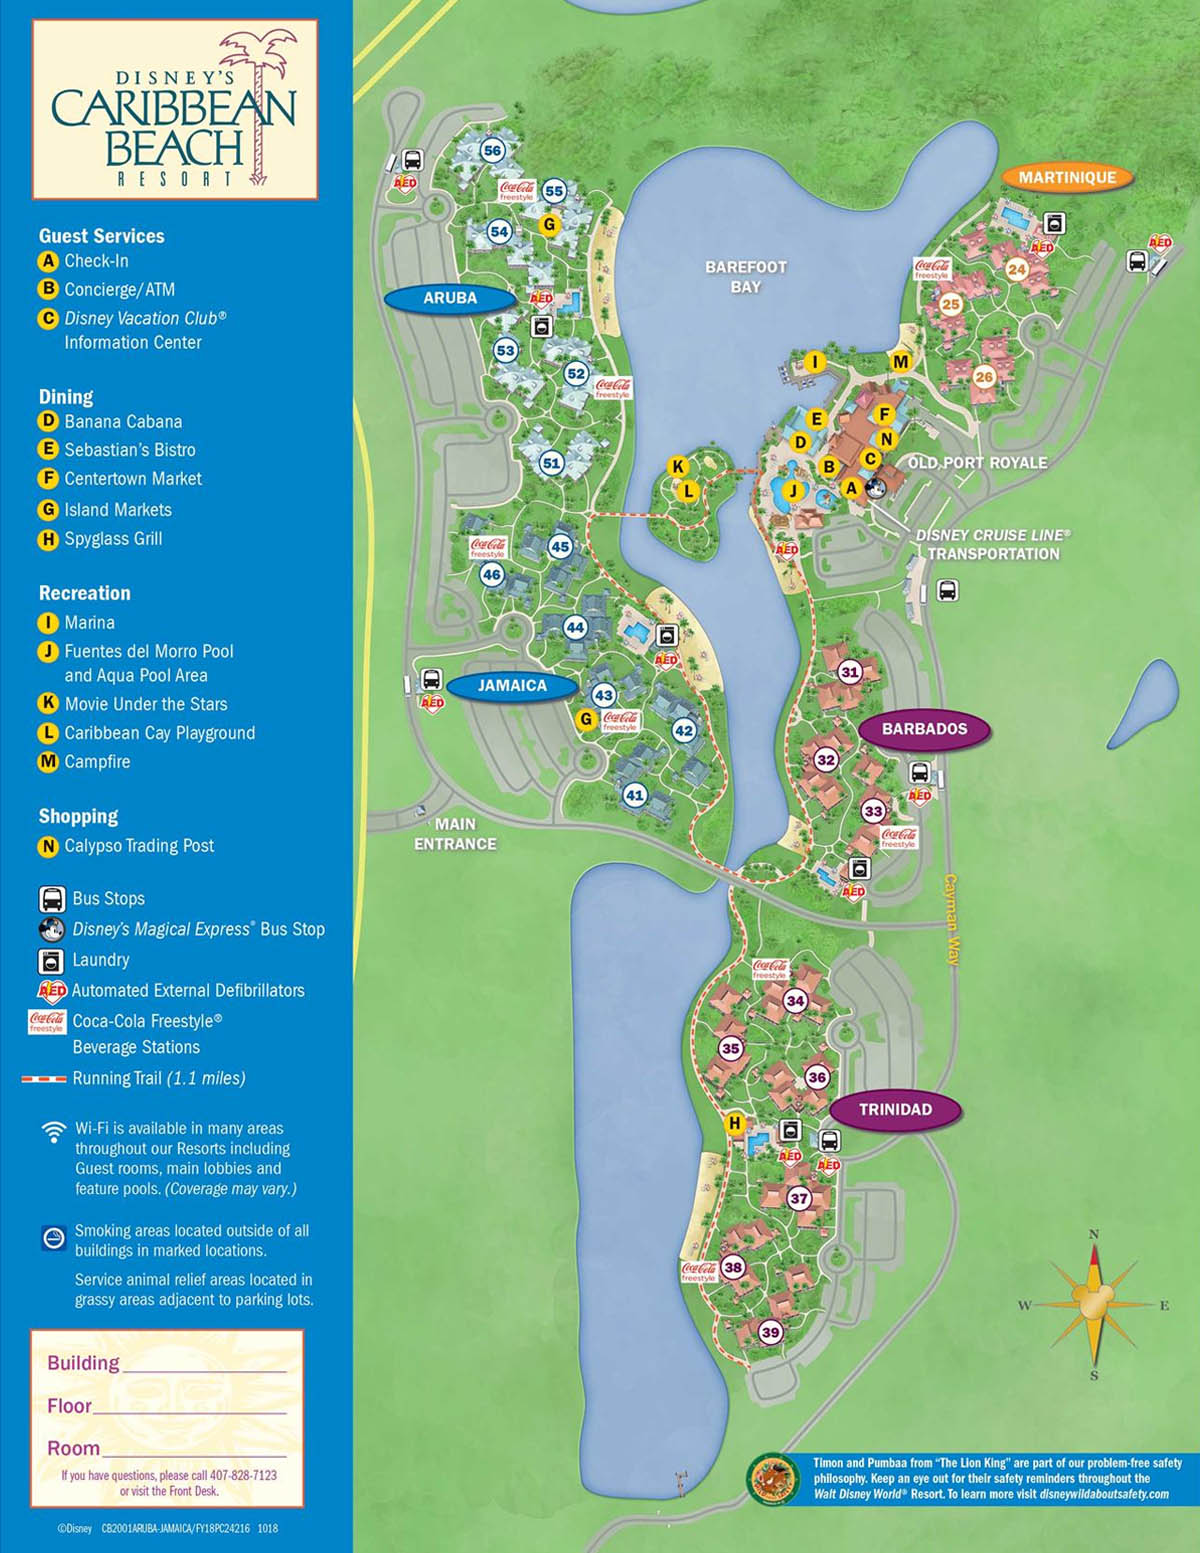 Disney Caribbean Beach Resort Map - Directions to the Resort